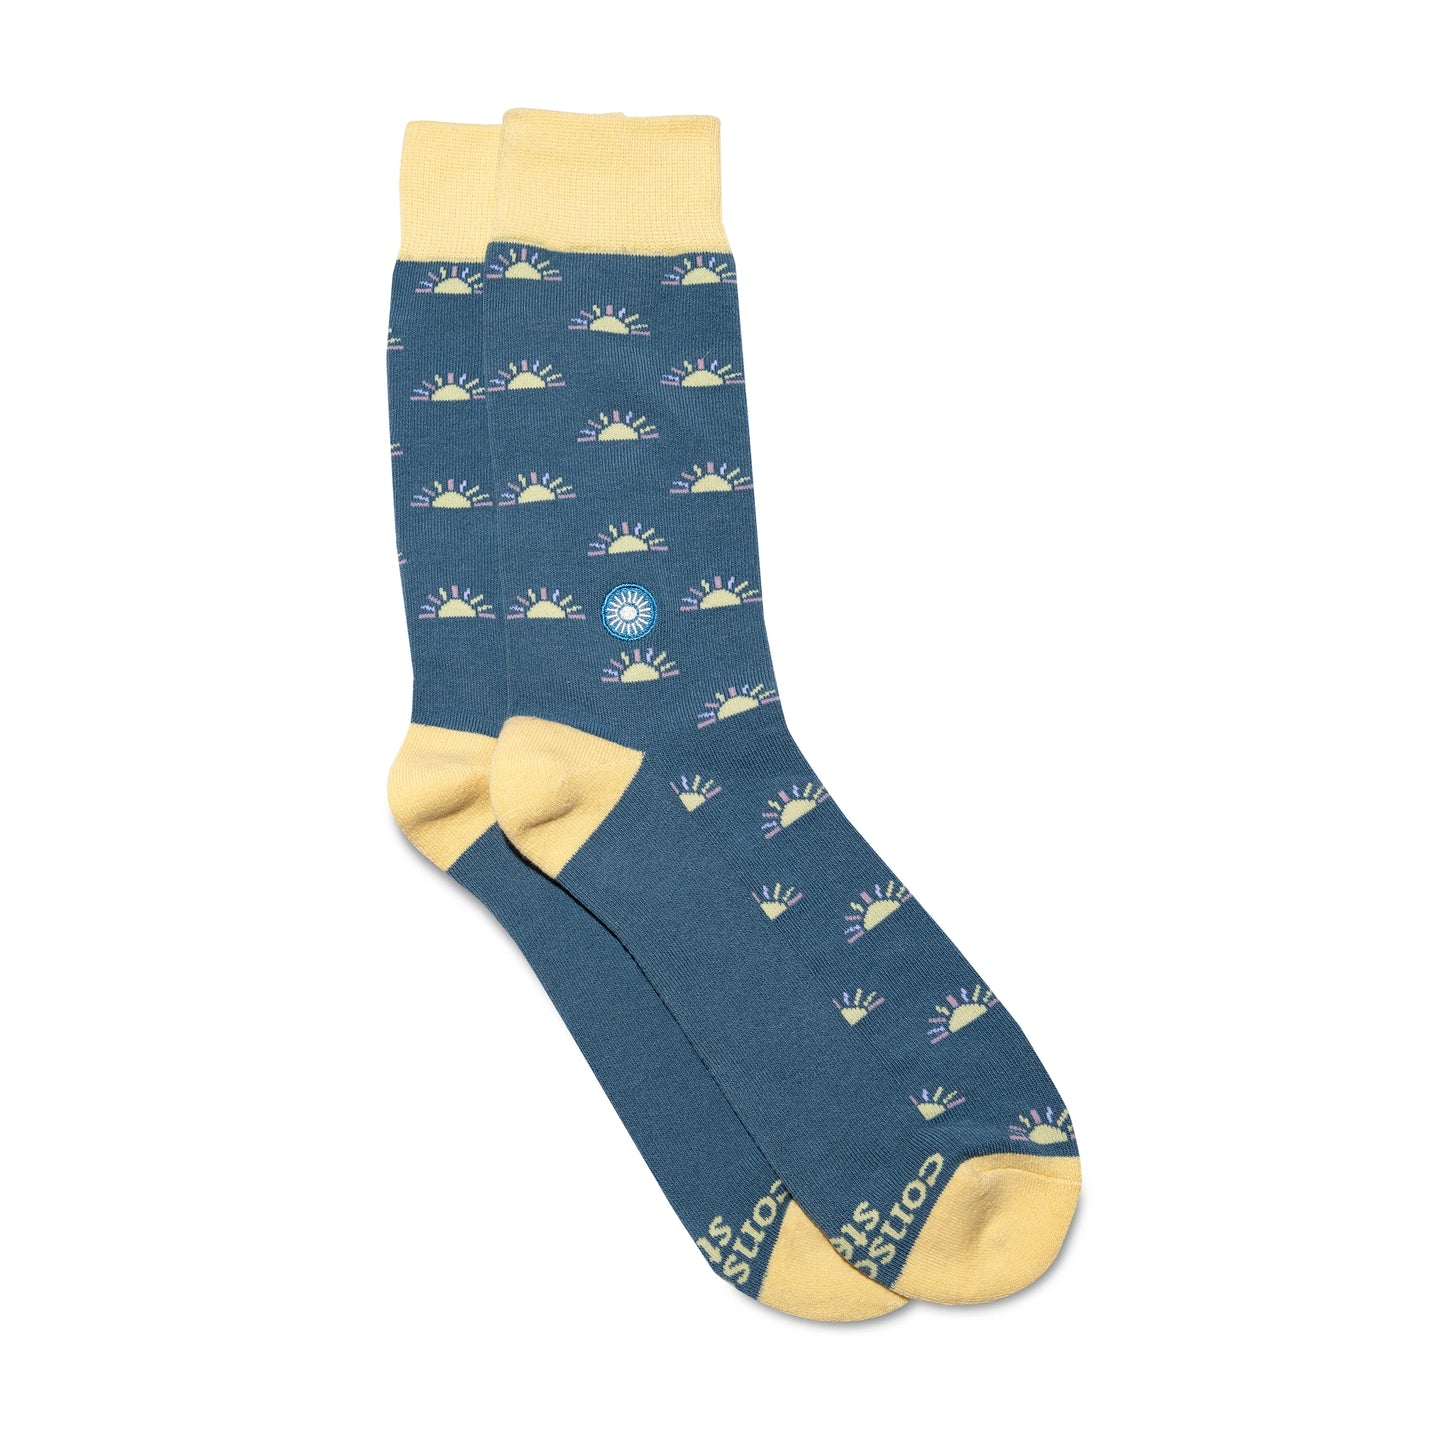 Socks that Support Mental Health - Sunshine Pattern